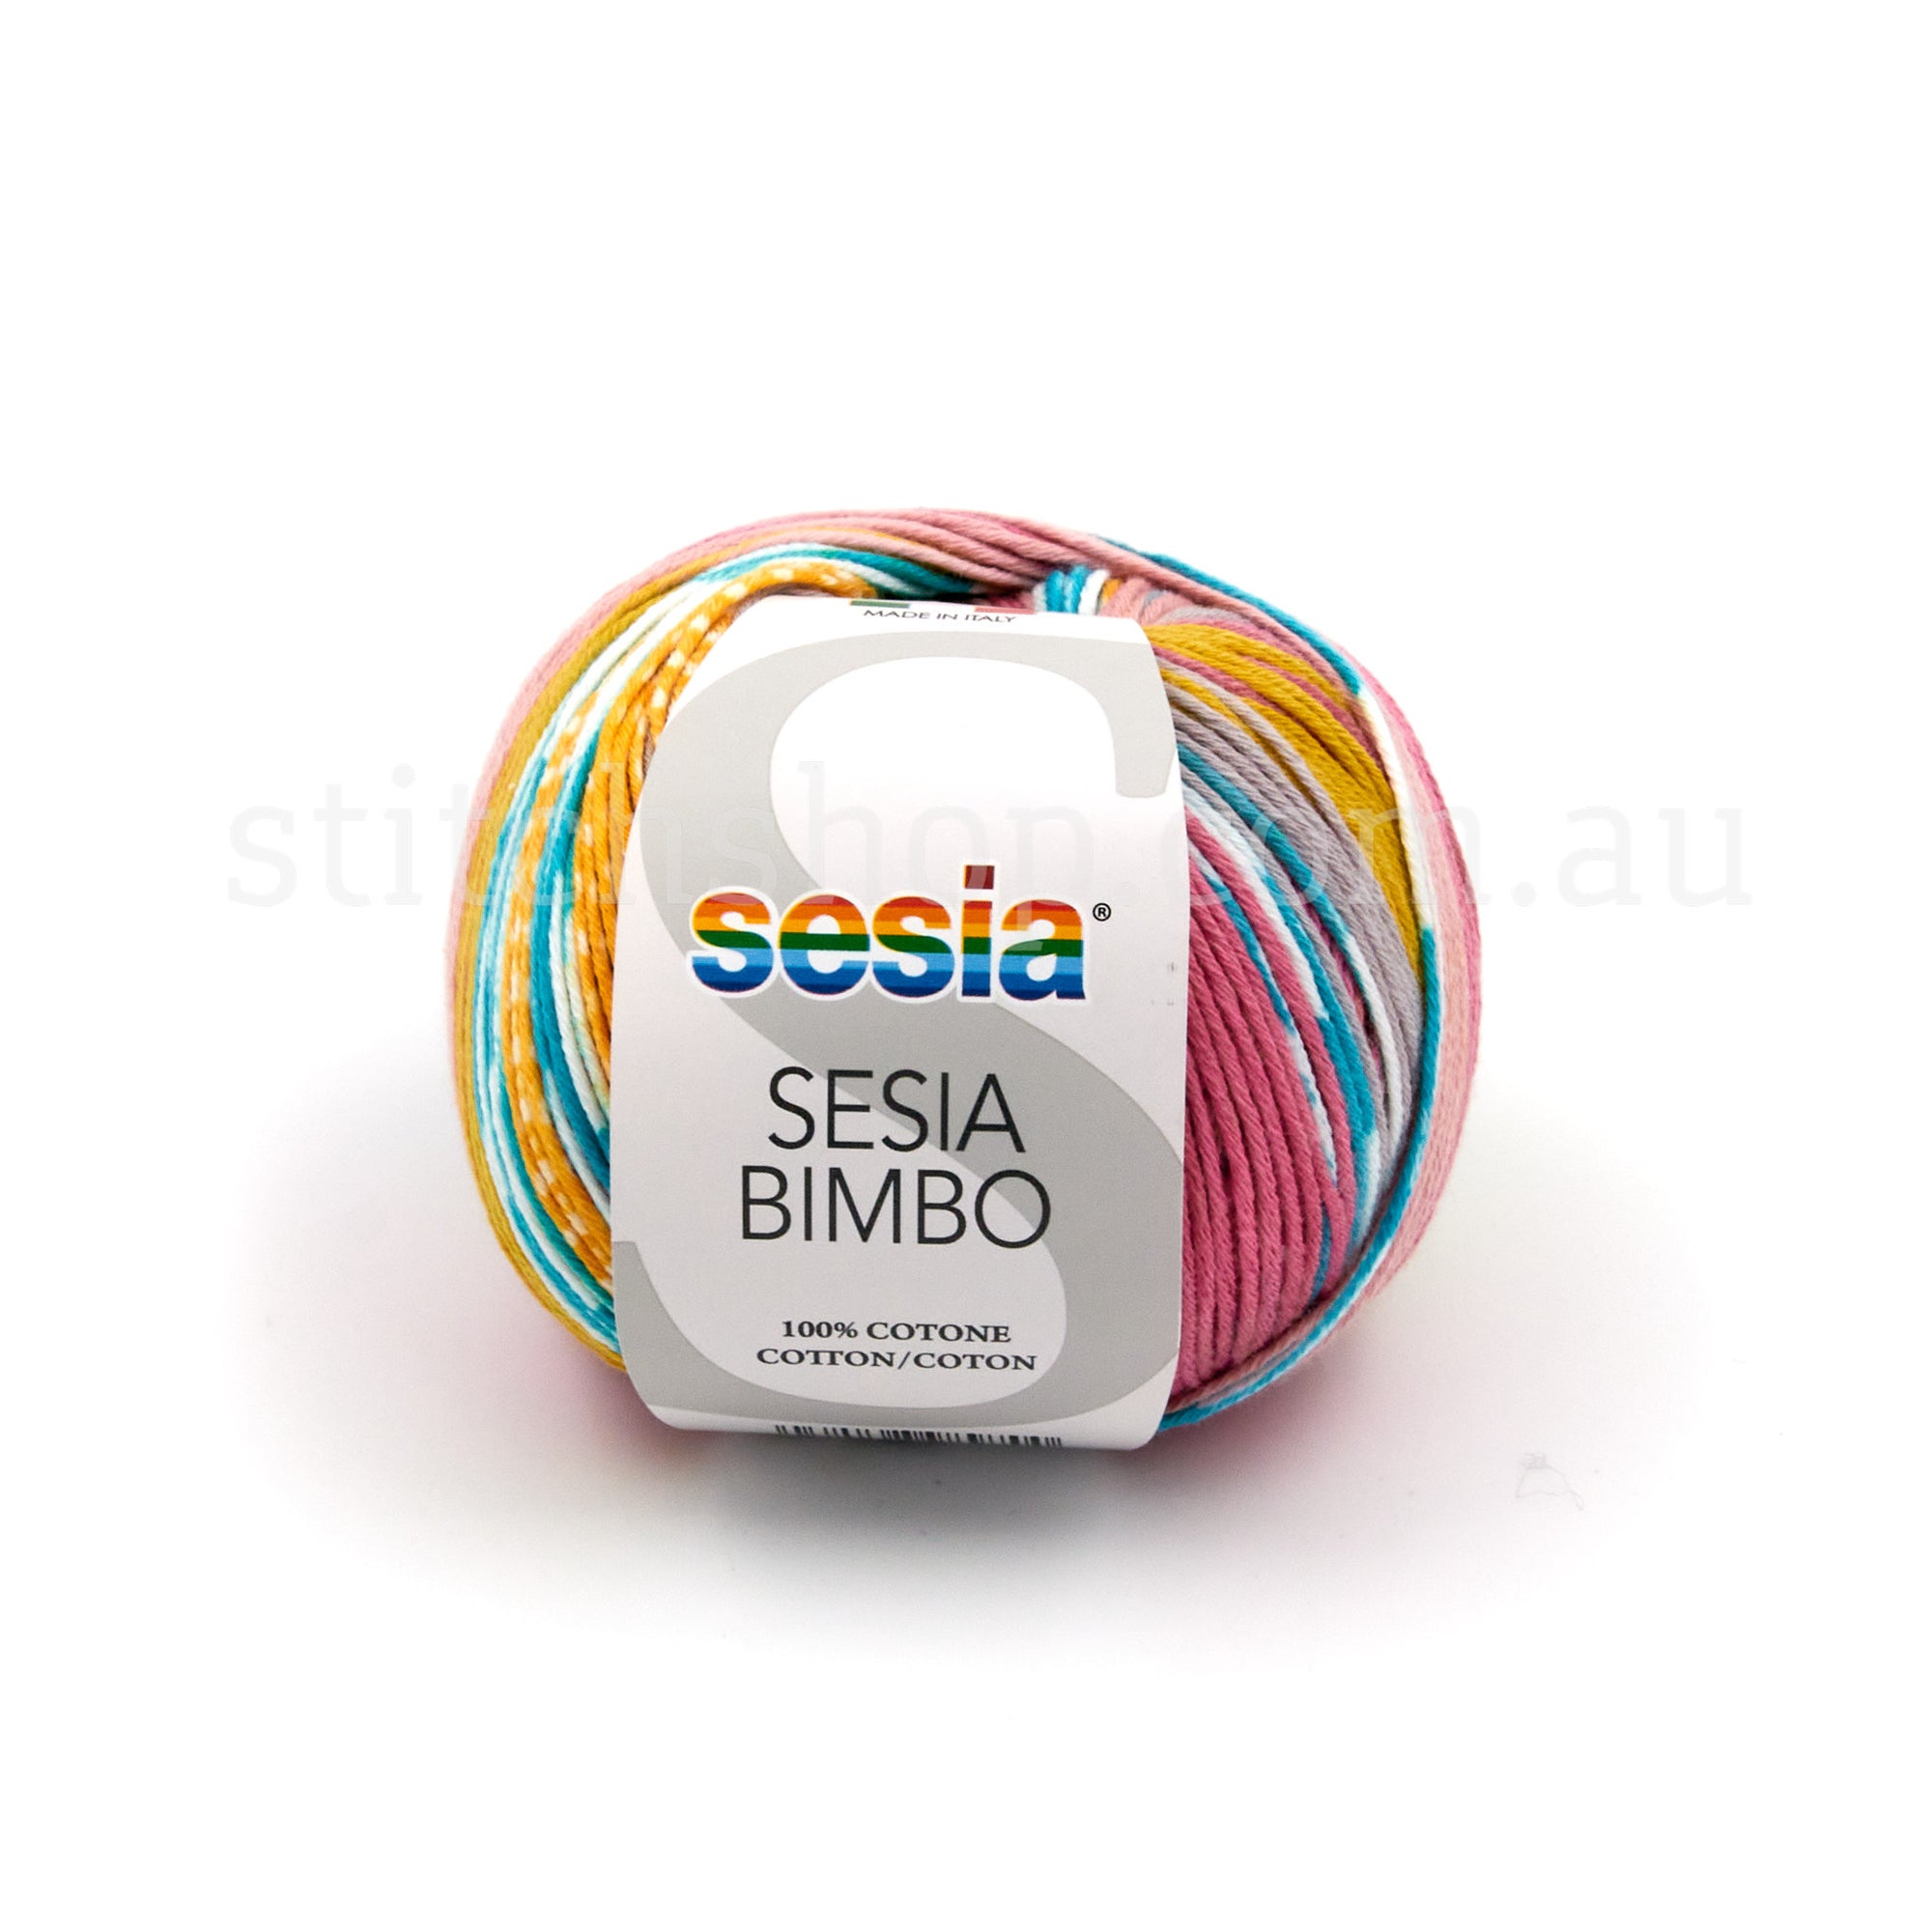 Sesia Bimbo 4 ply Cotton - Gelato (462) (8032868989700)